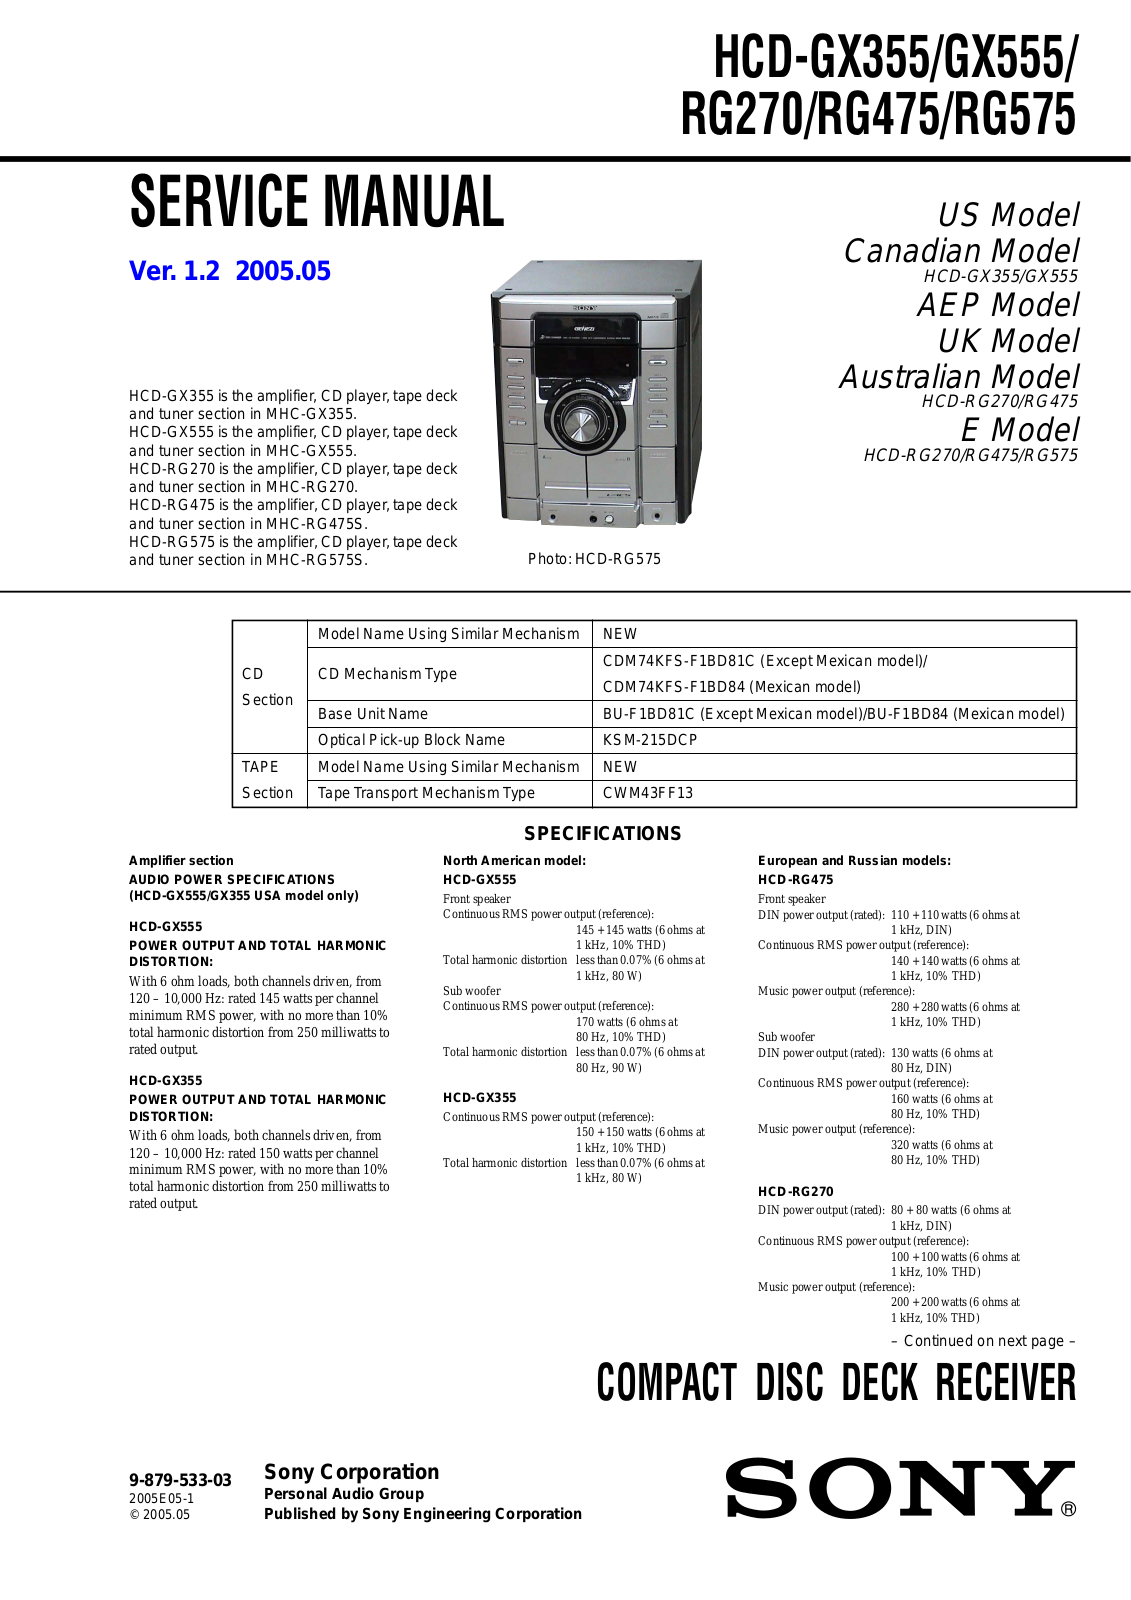 SONY HCD-GX355, HCD-GX555, HCD-RG475, HCD-RG575 Service Manual